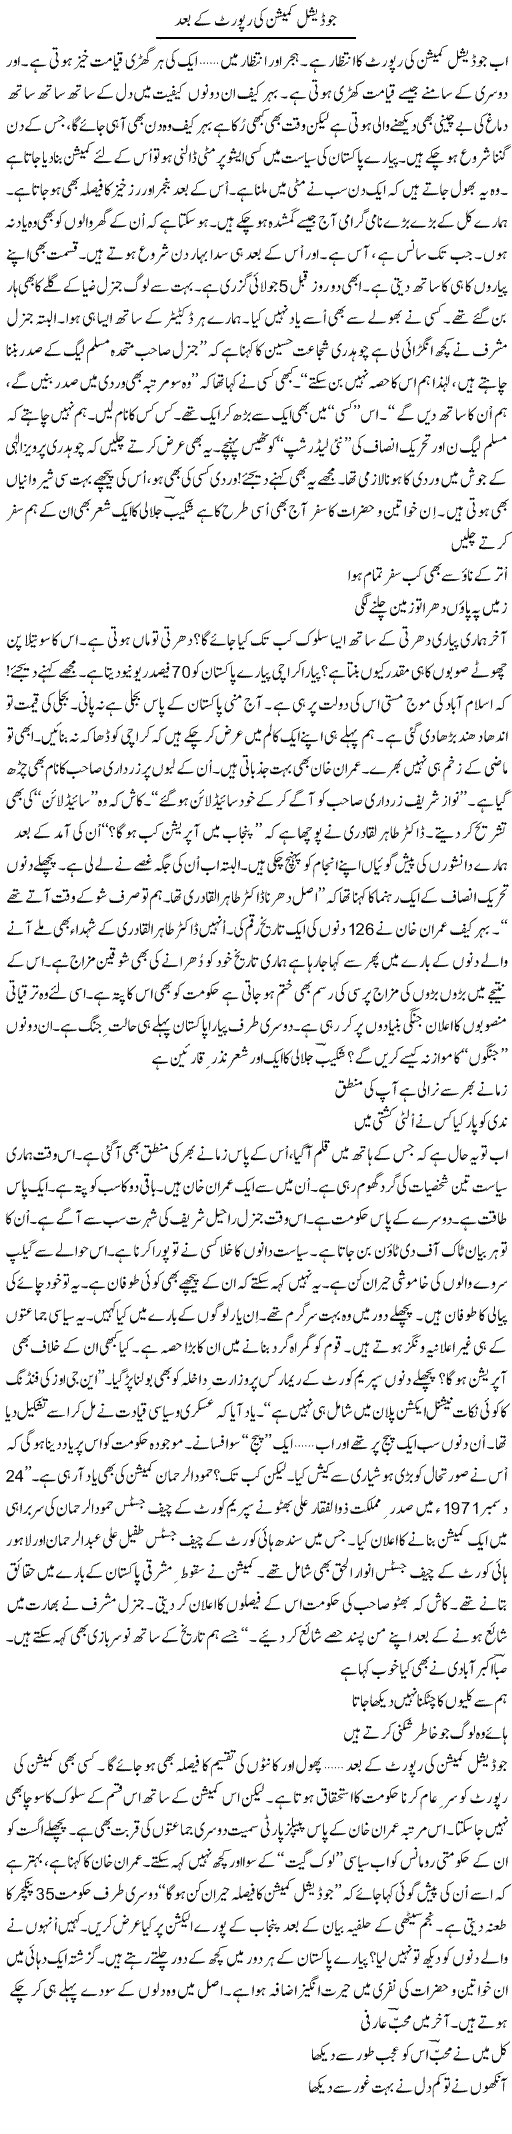 Judicial Commission Ki Report Ke Baad | Ejaz Hafeez Khan | Daily Urdu Columns